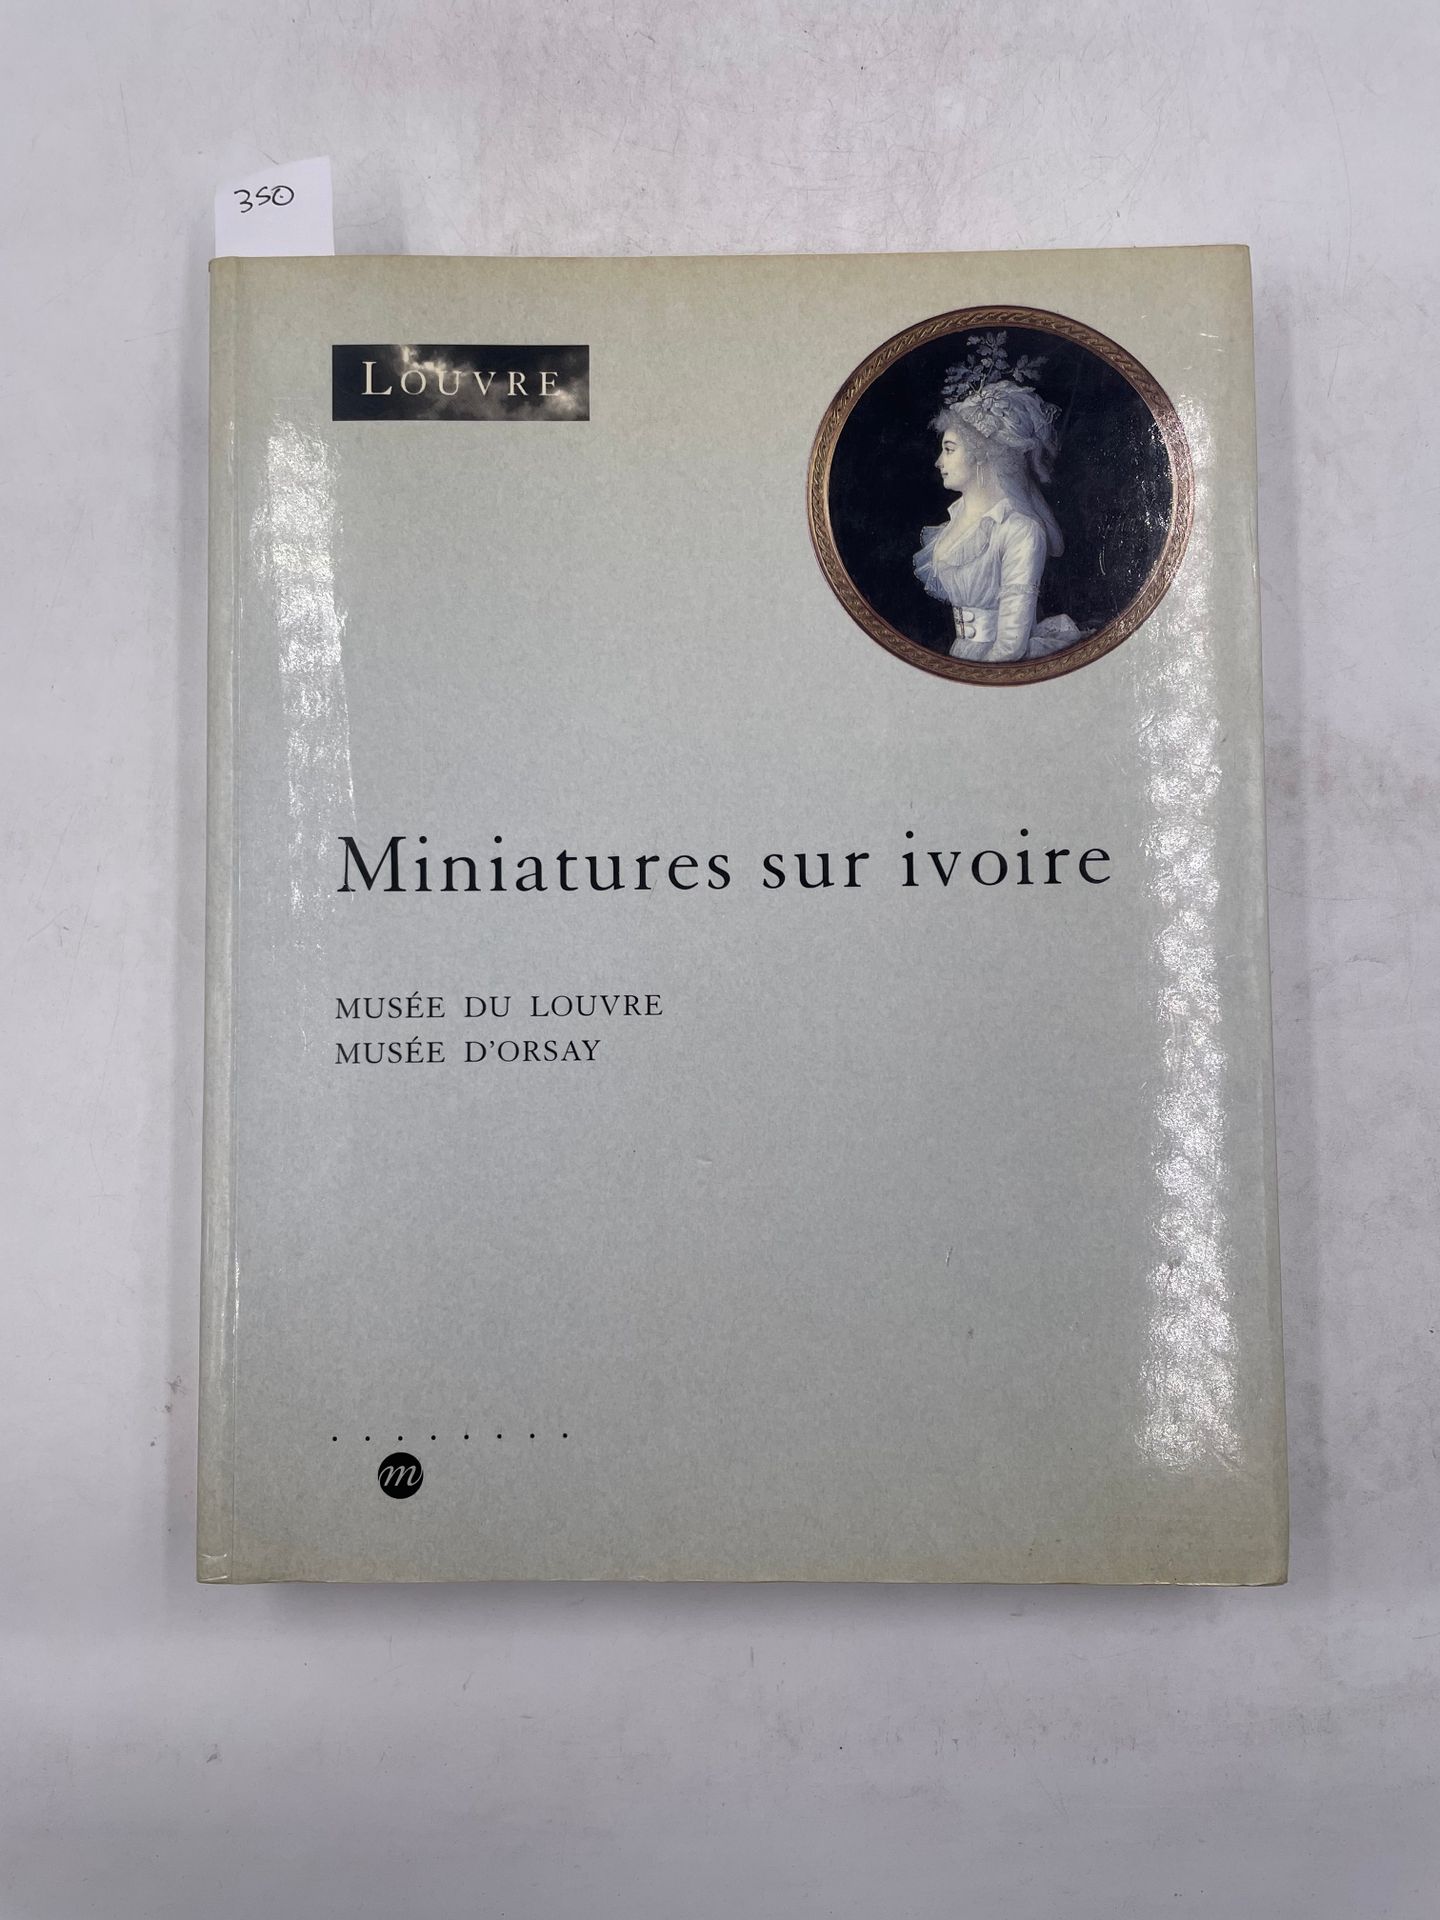 Null "象牙上的微型画，卢浮宫博物馆，奥赛博物馆"，Pierrette Jean-Richard 编辑，国家博物馆联盟，1994 年